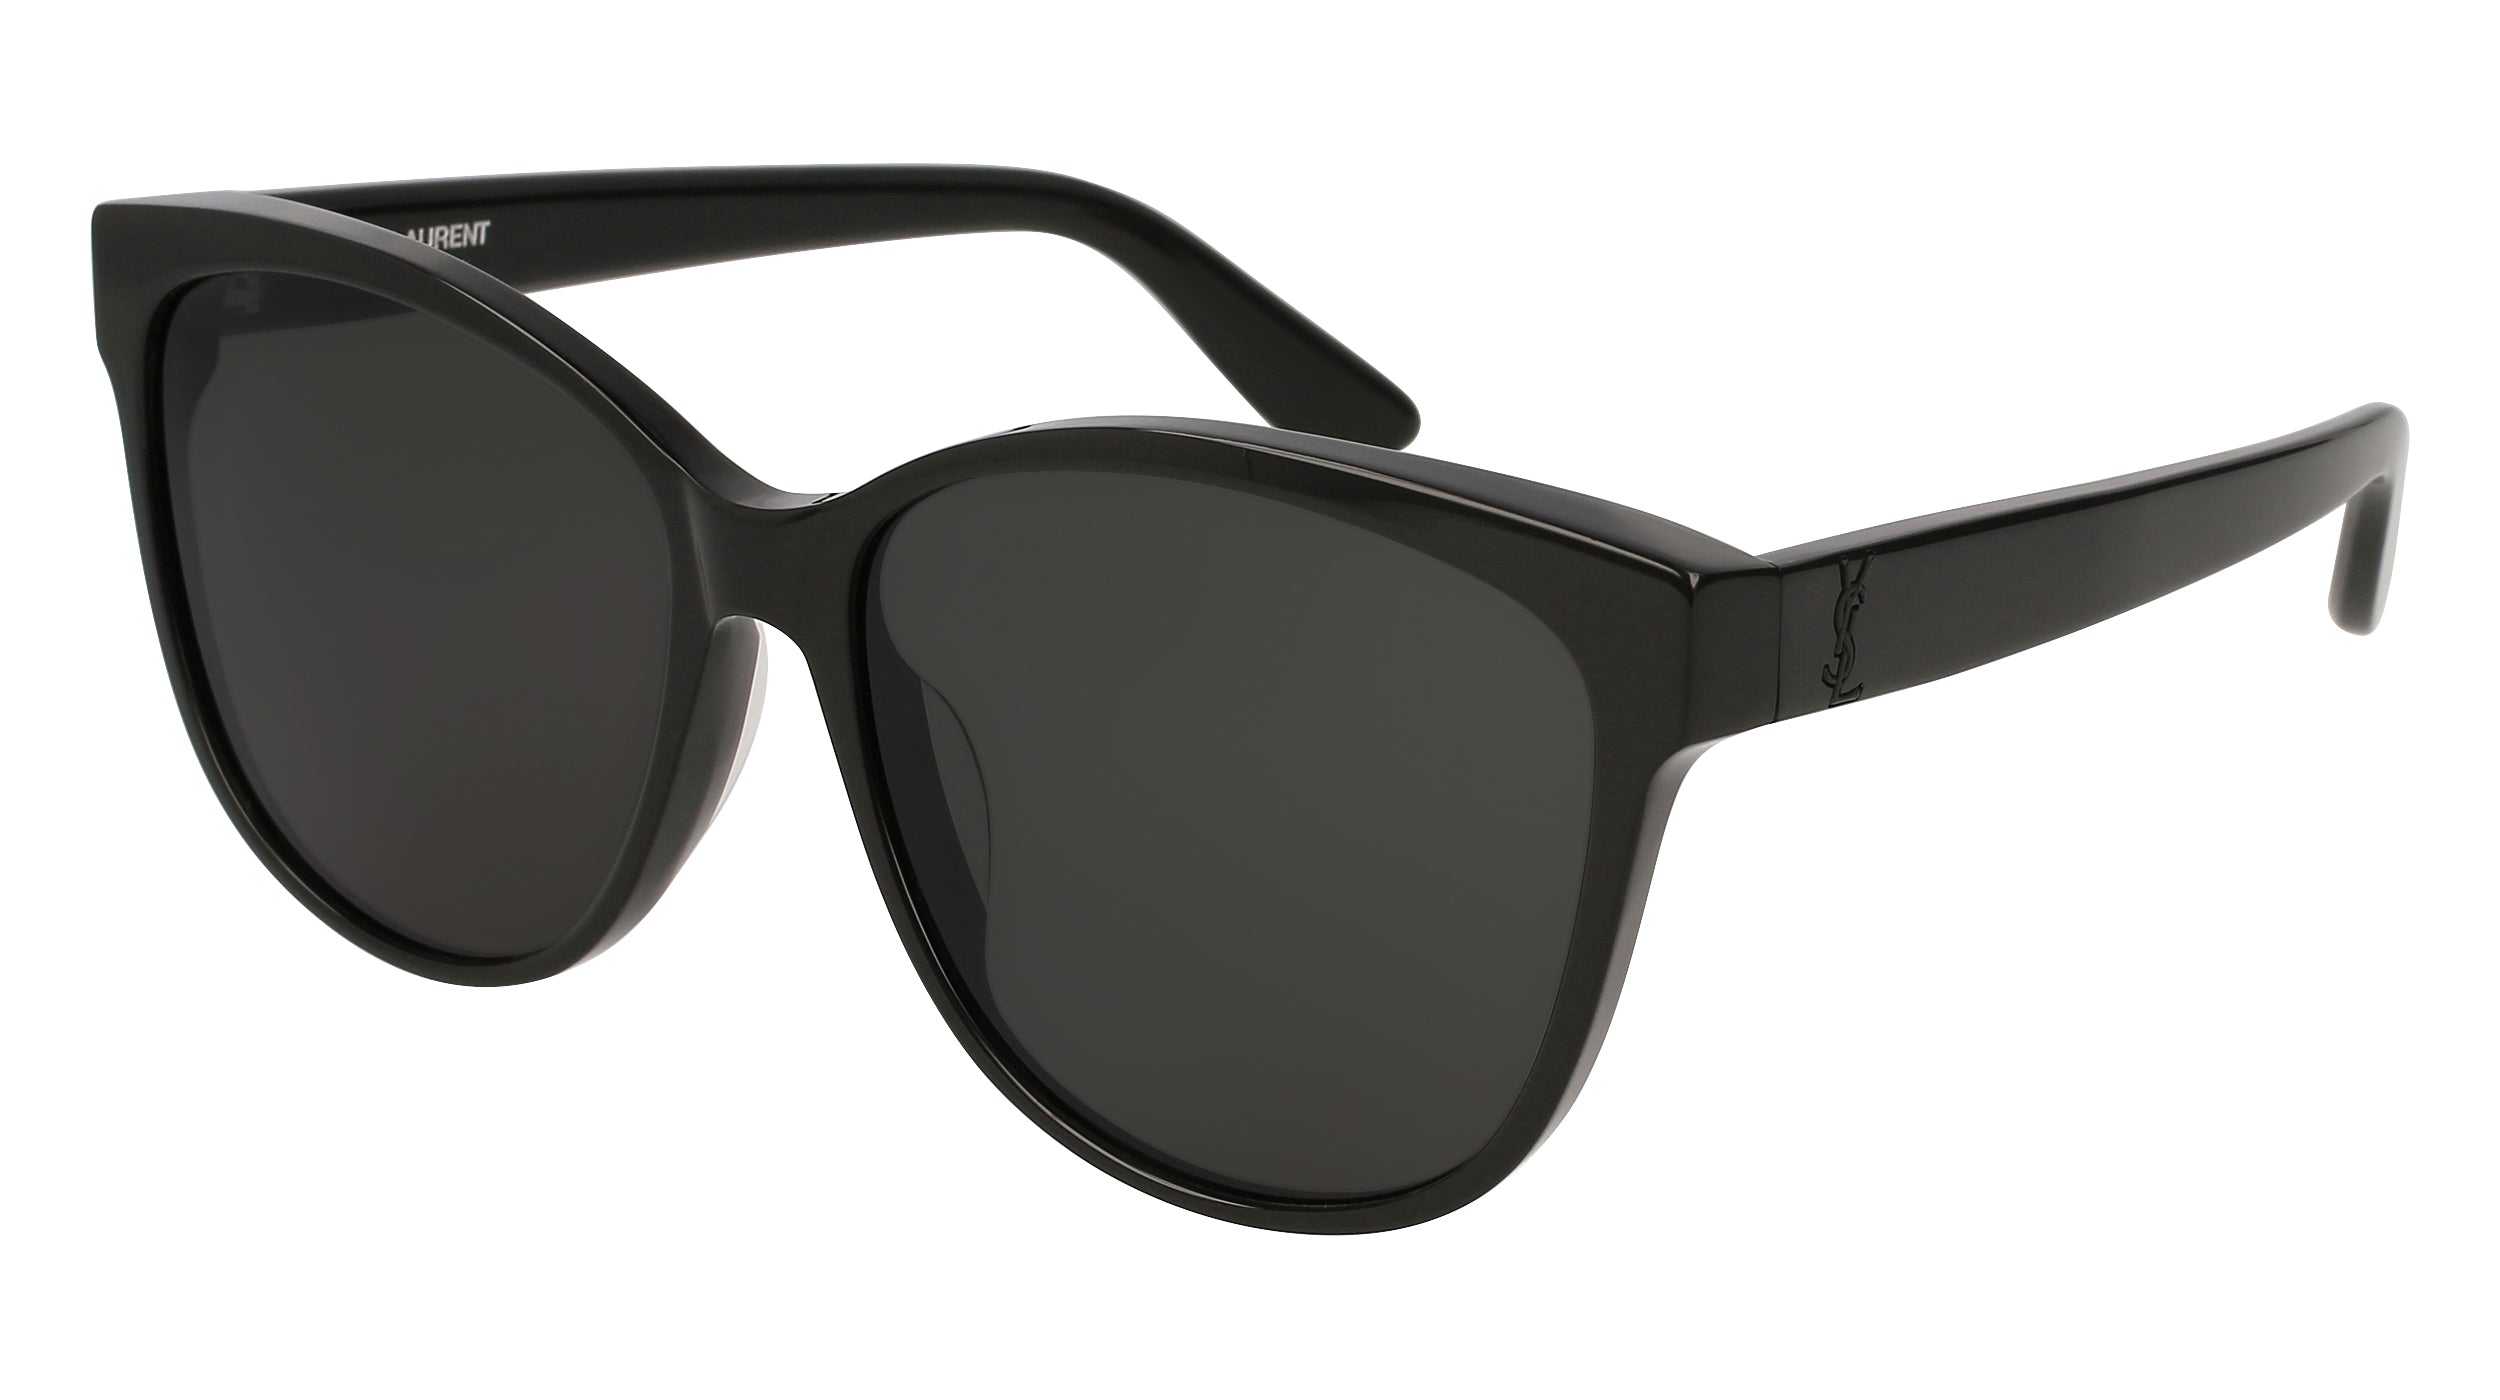 YSL oversized D-frame acetate sunglasses